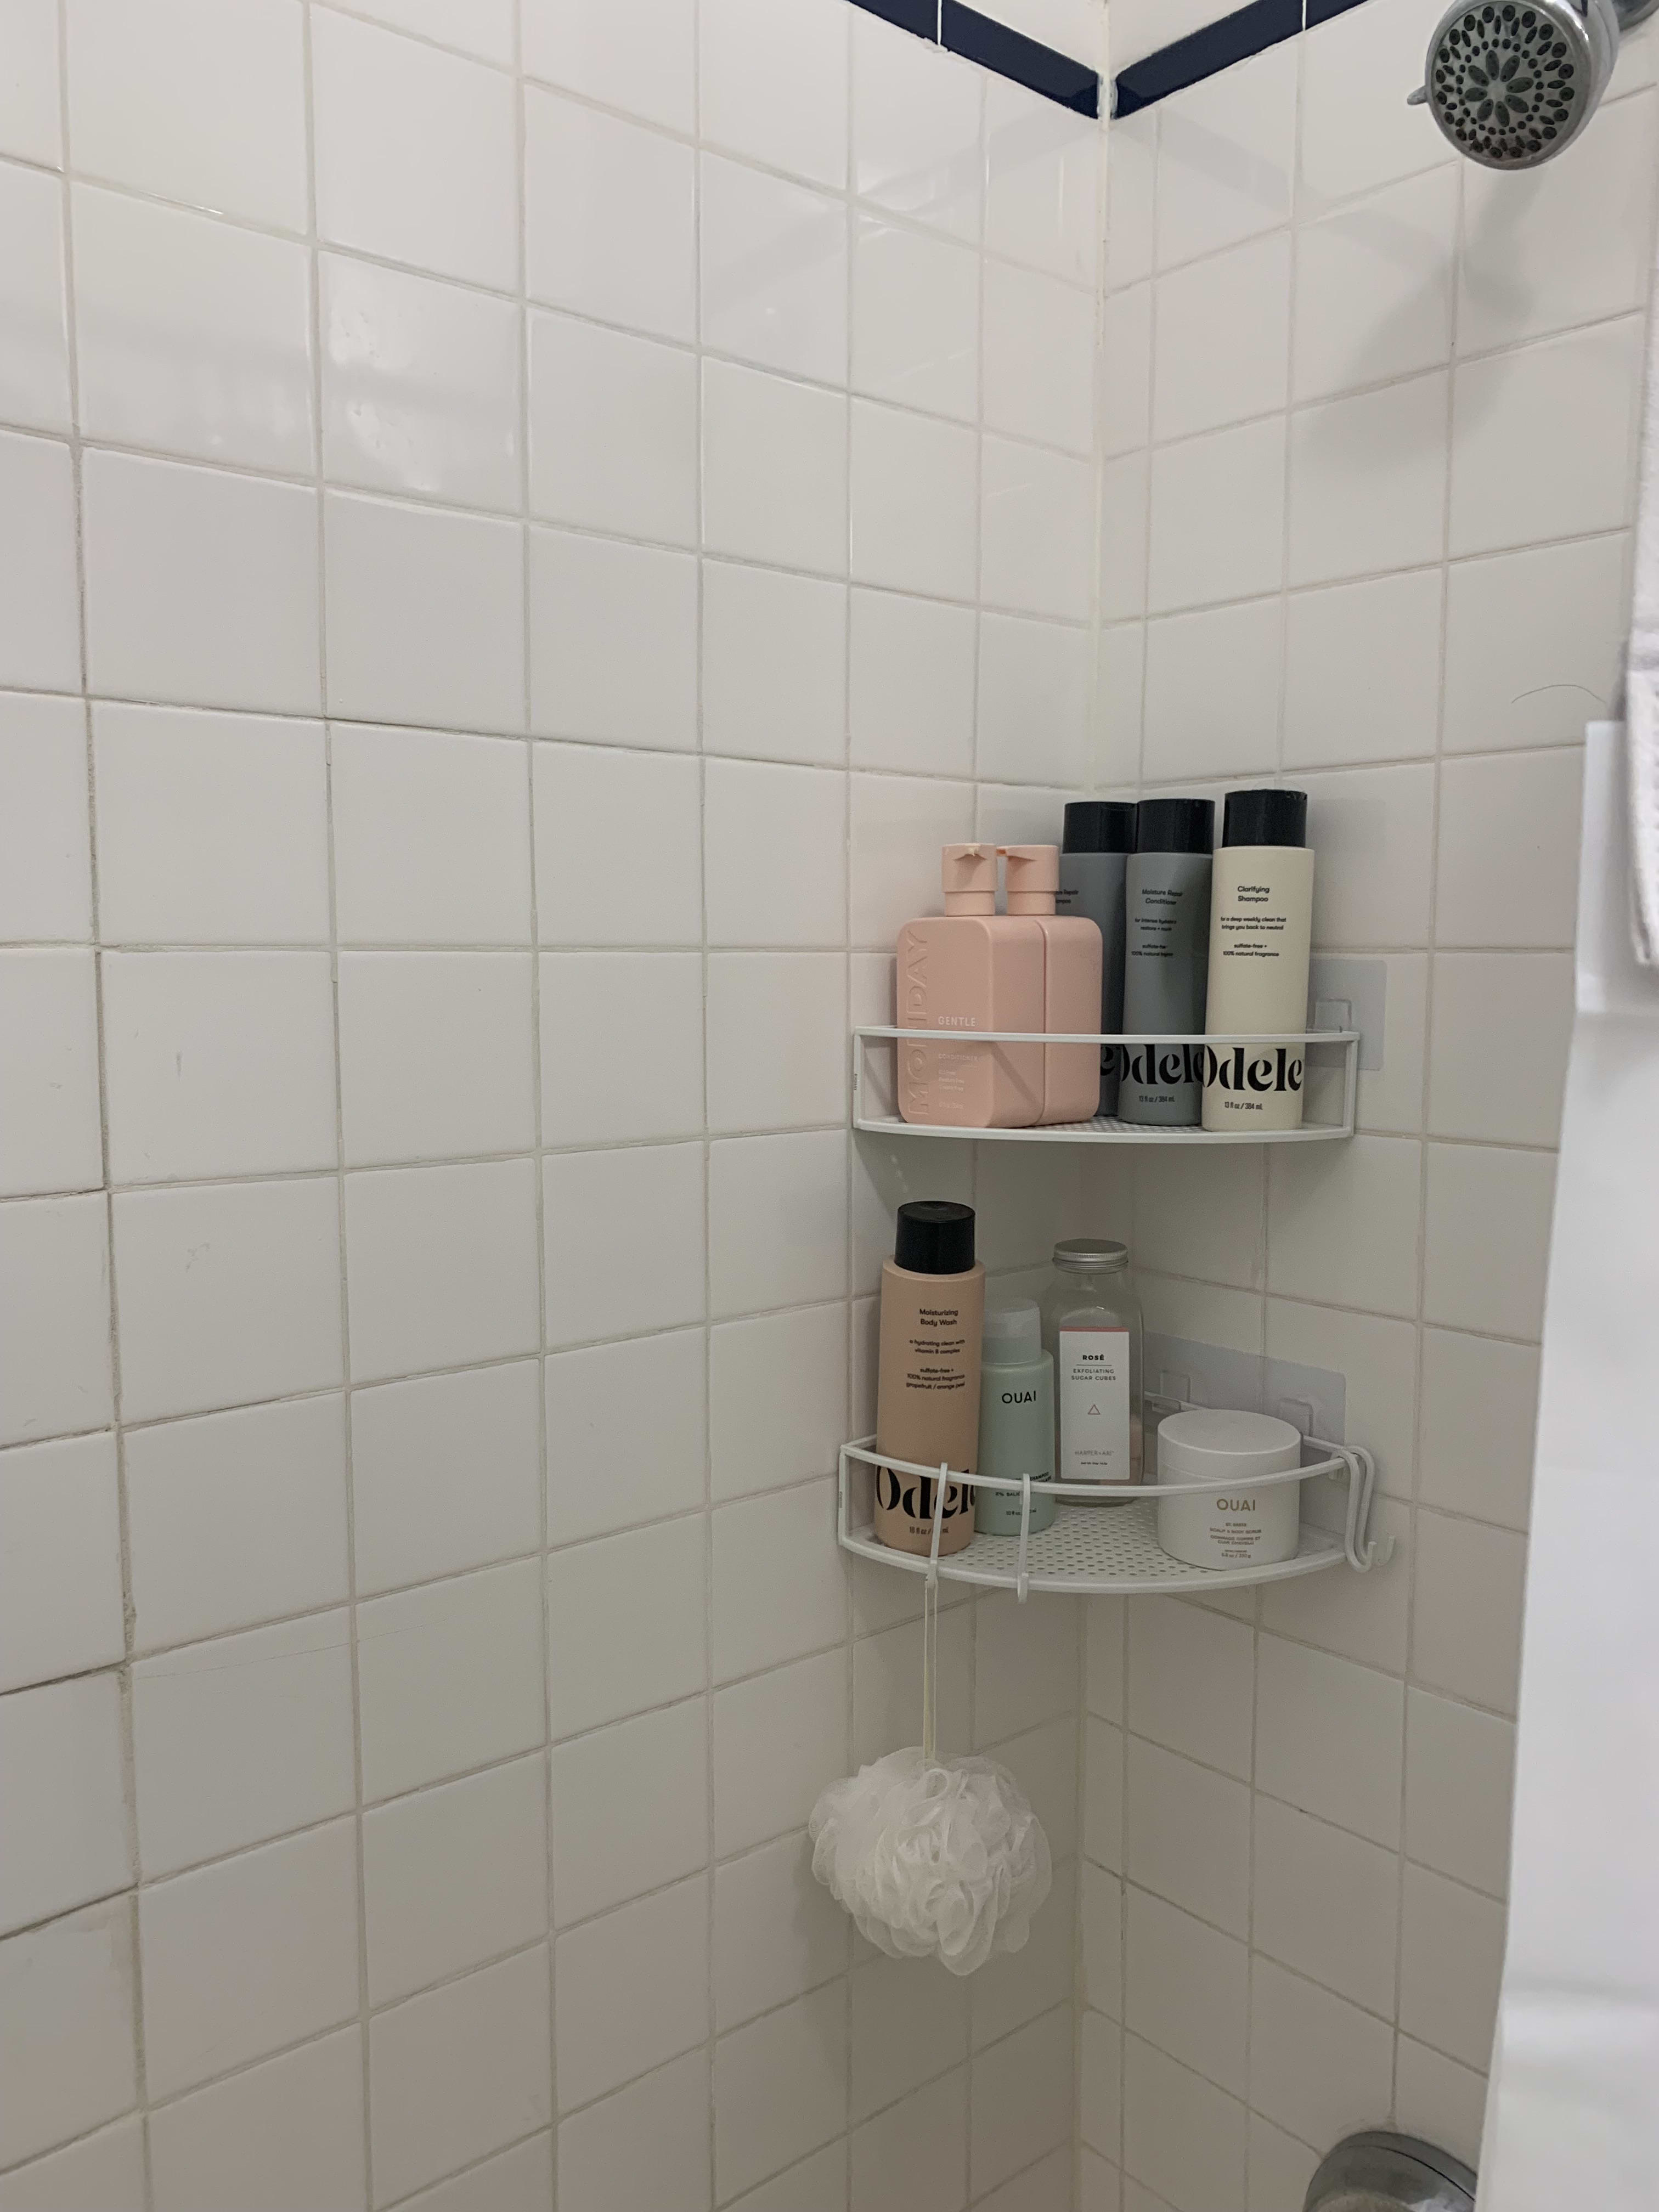 https://cdn.apartmenttherapy.info/image/upload/v1666639758/at/umbra-bathroom-bins-review.jpg